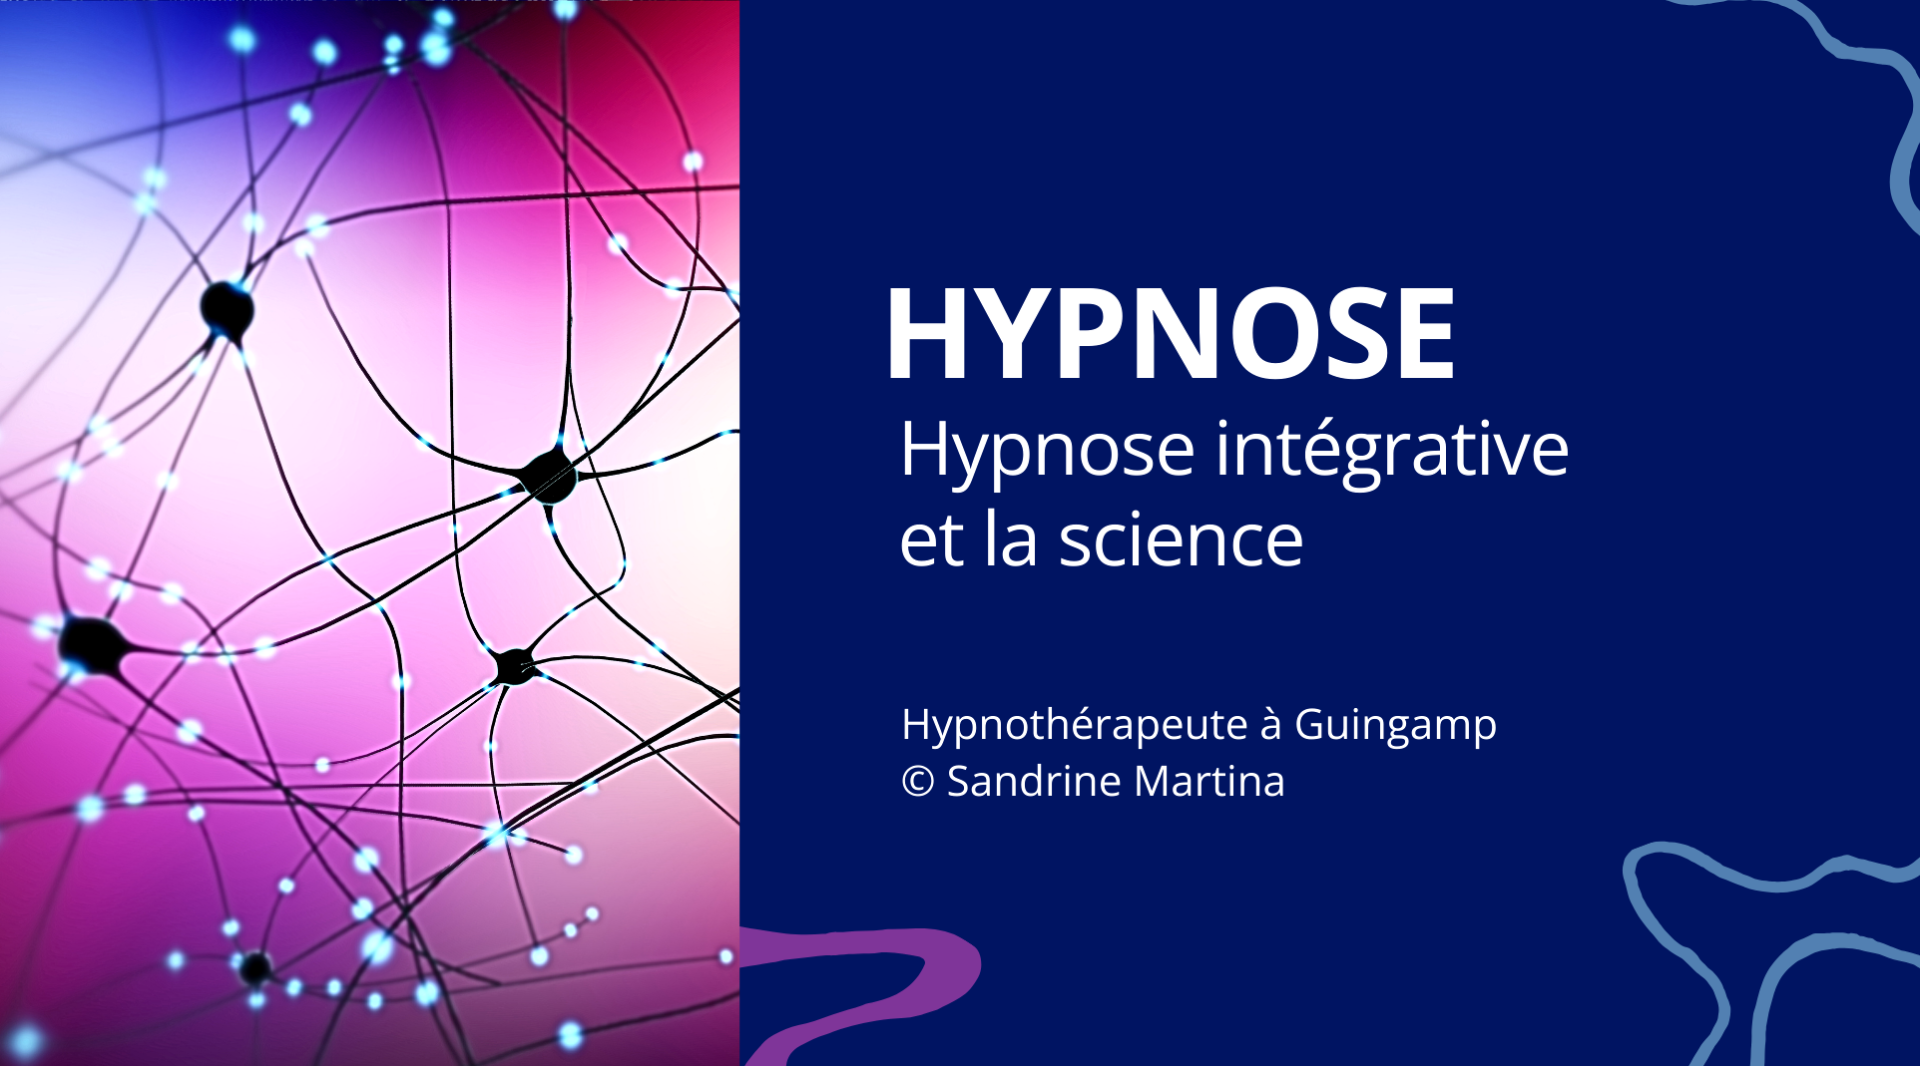 Hypnotiseur guingamp sandrine martina hypnose et science hypnose integrative benefices